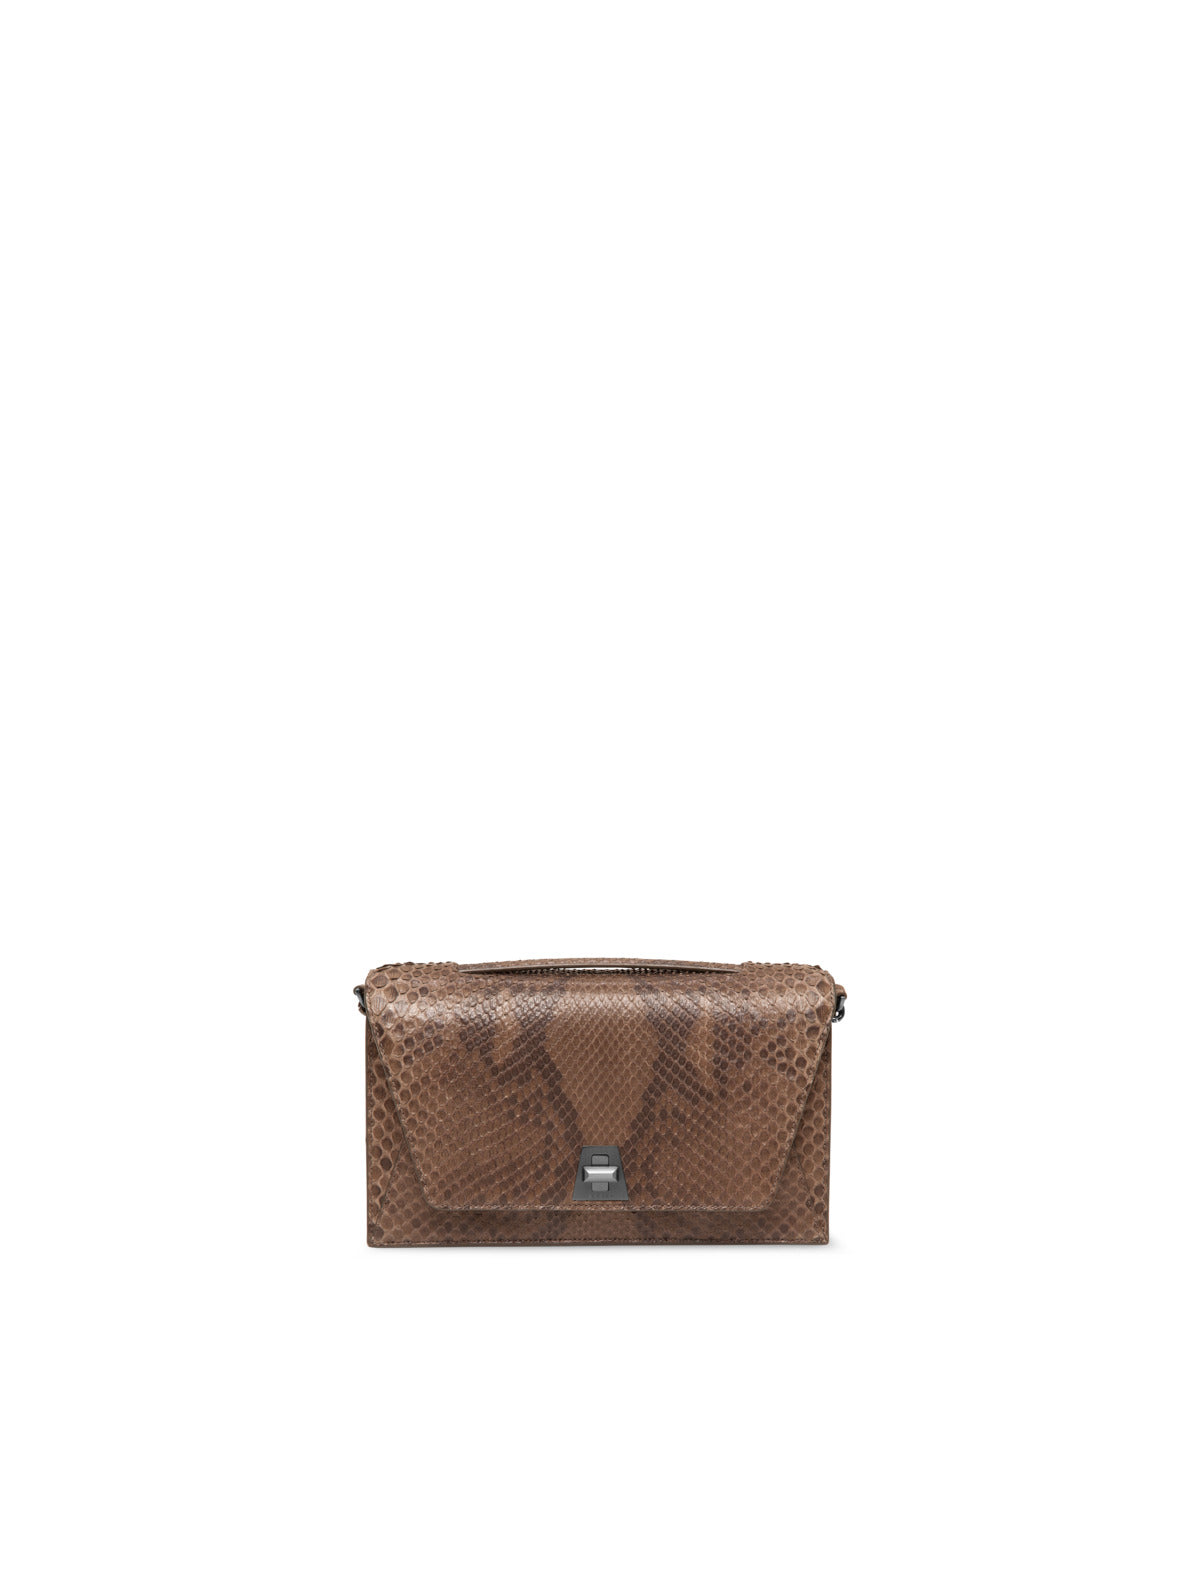 Shop Louis Vuitton Chain Leather Python Shoulder Bags by